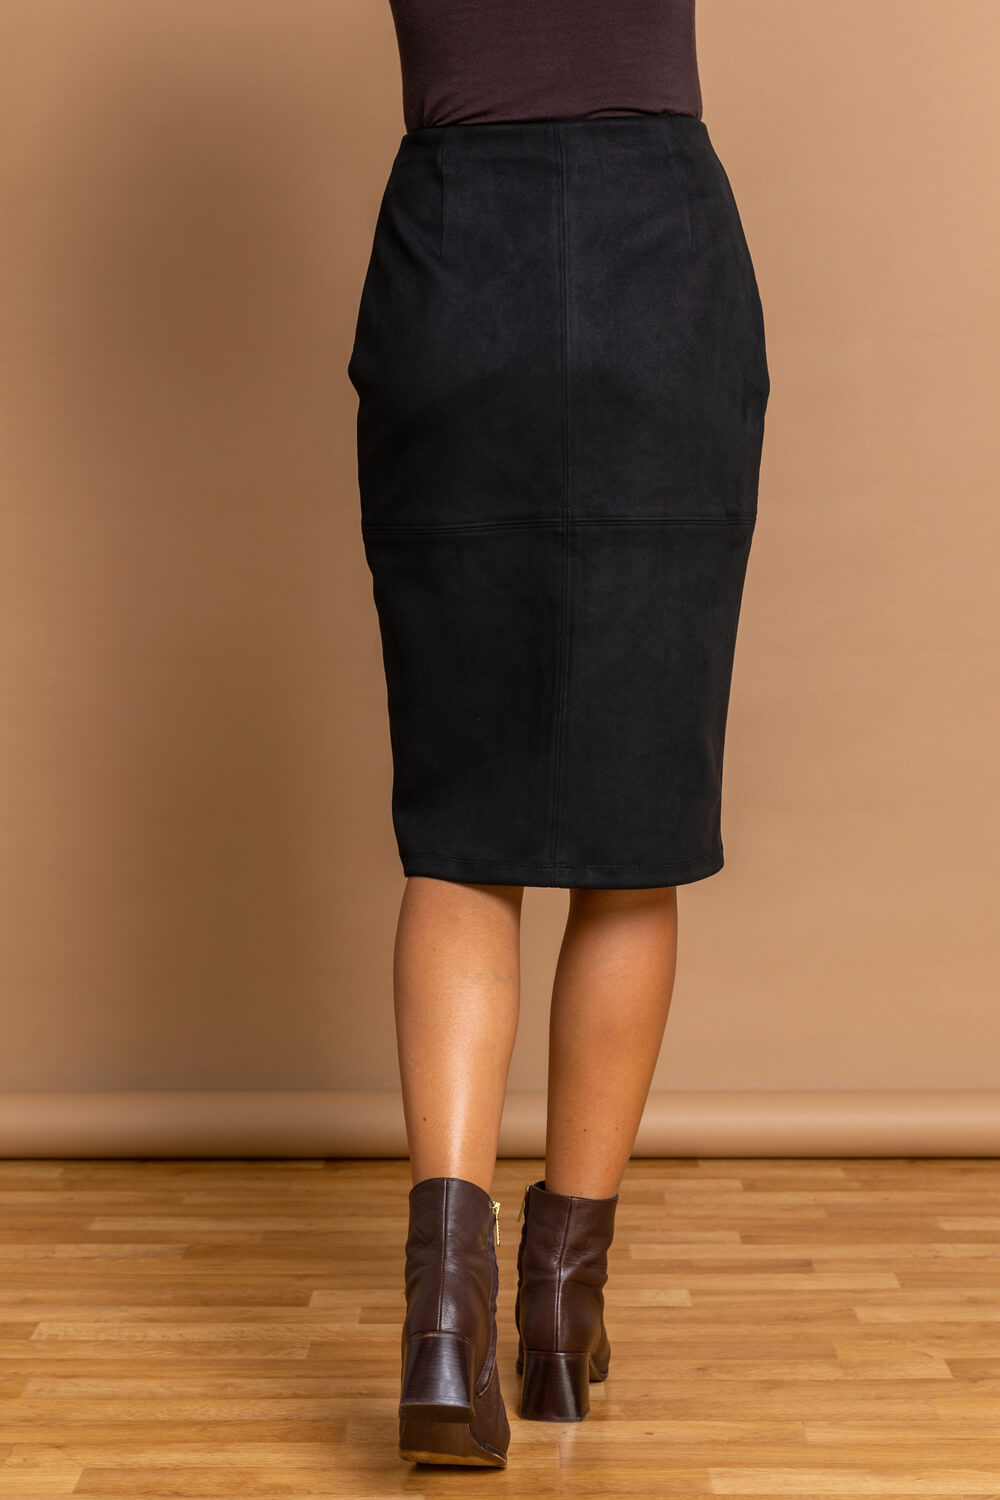 Black Suedette Stretch Pencil Skirt, Image 2 of 4